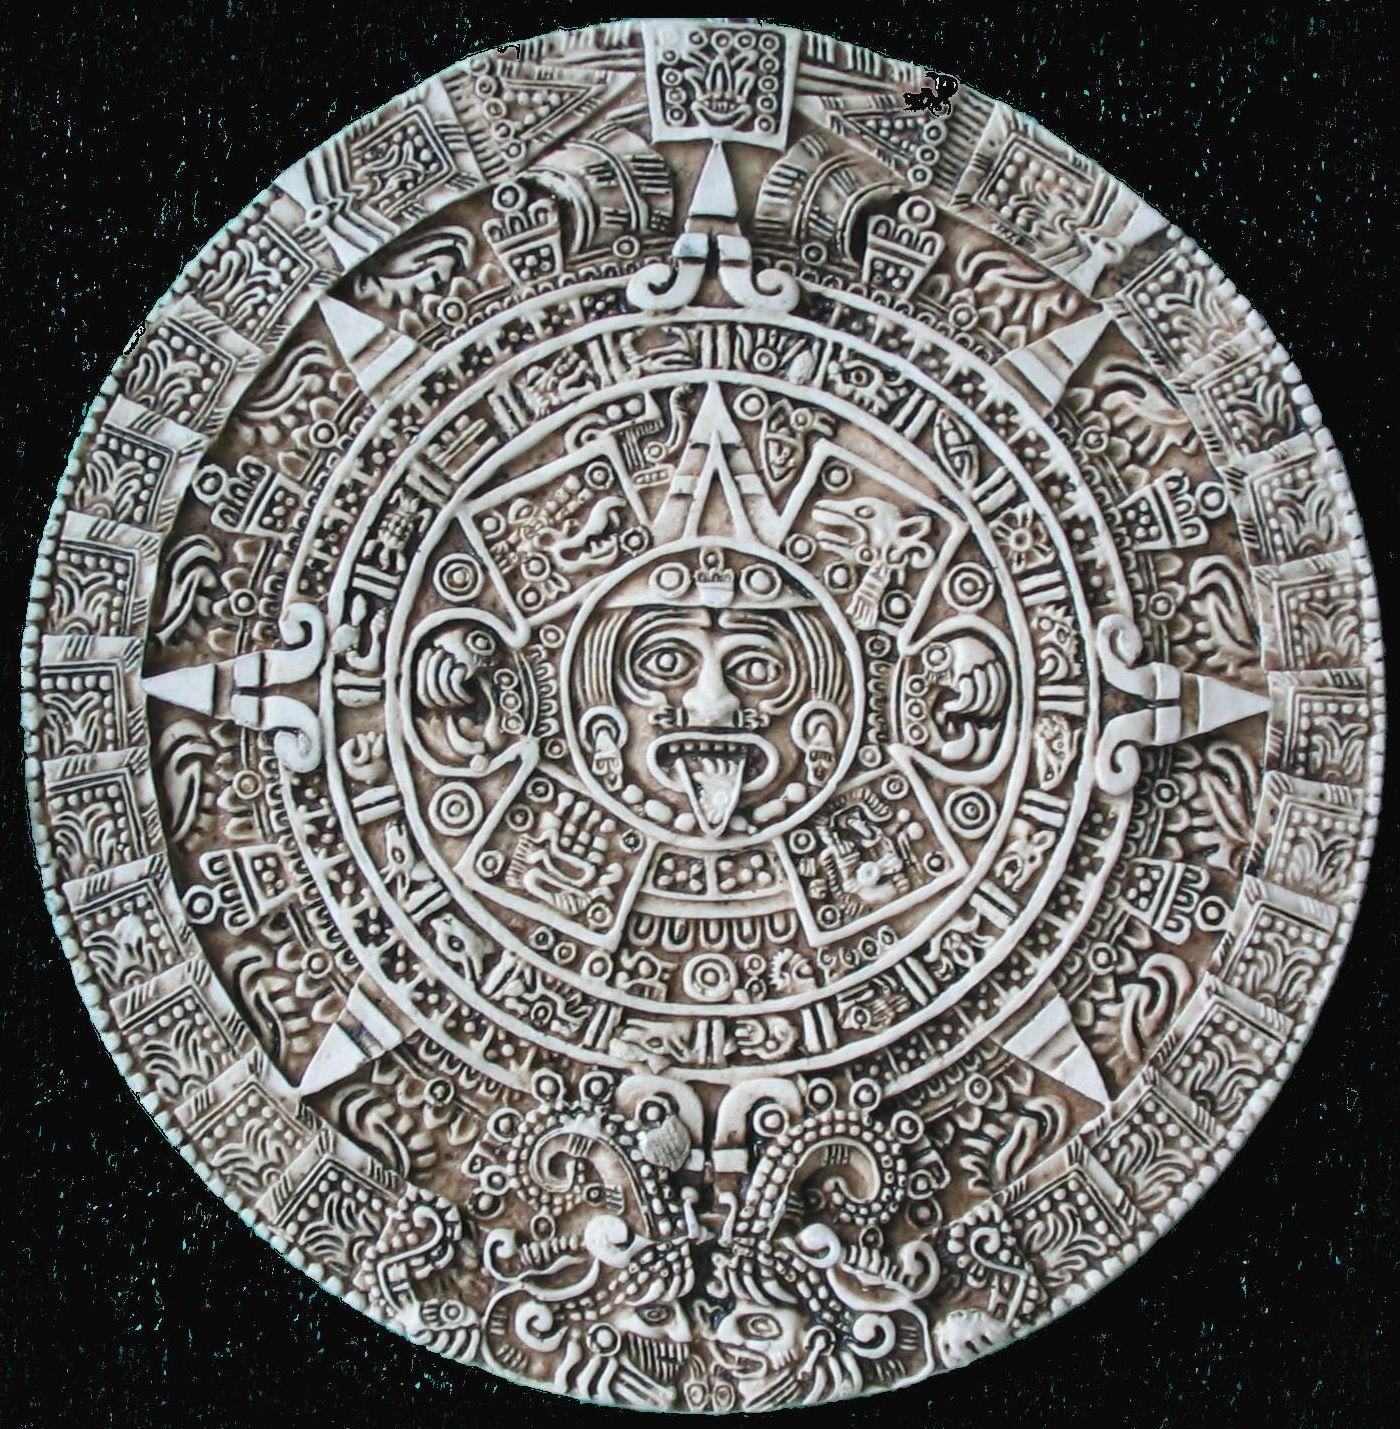 Aztec Calendar Image